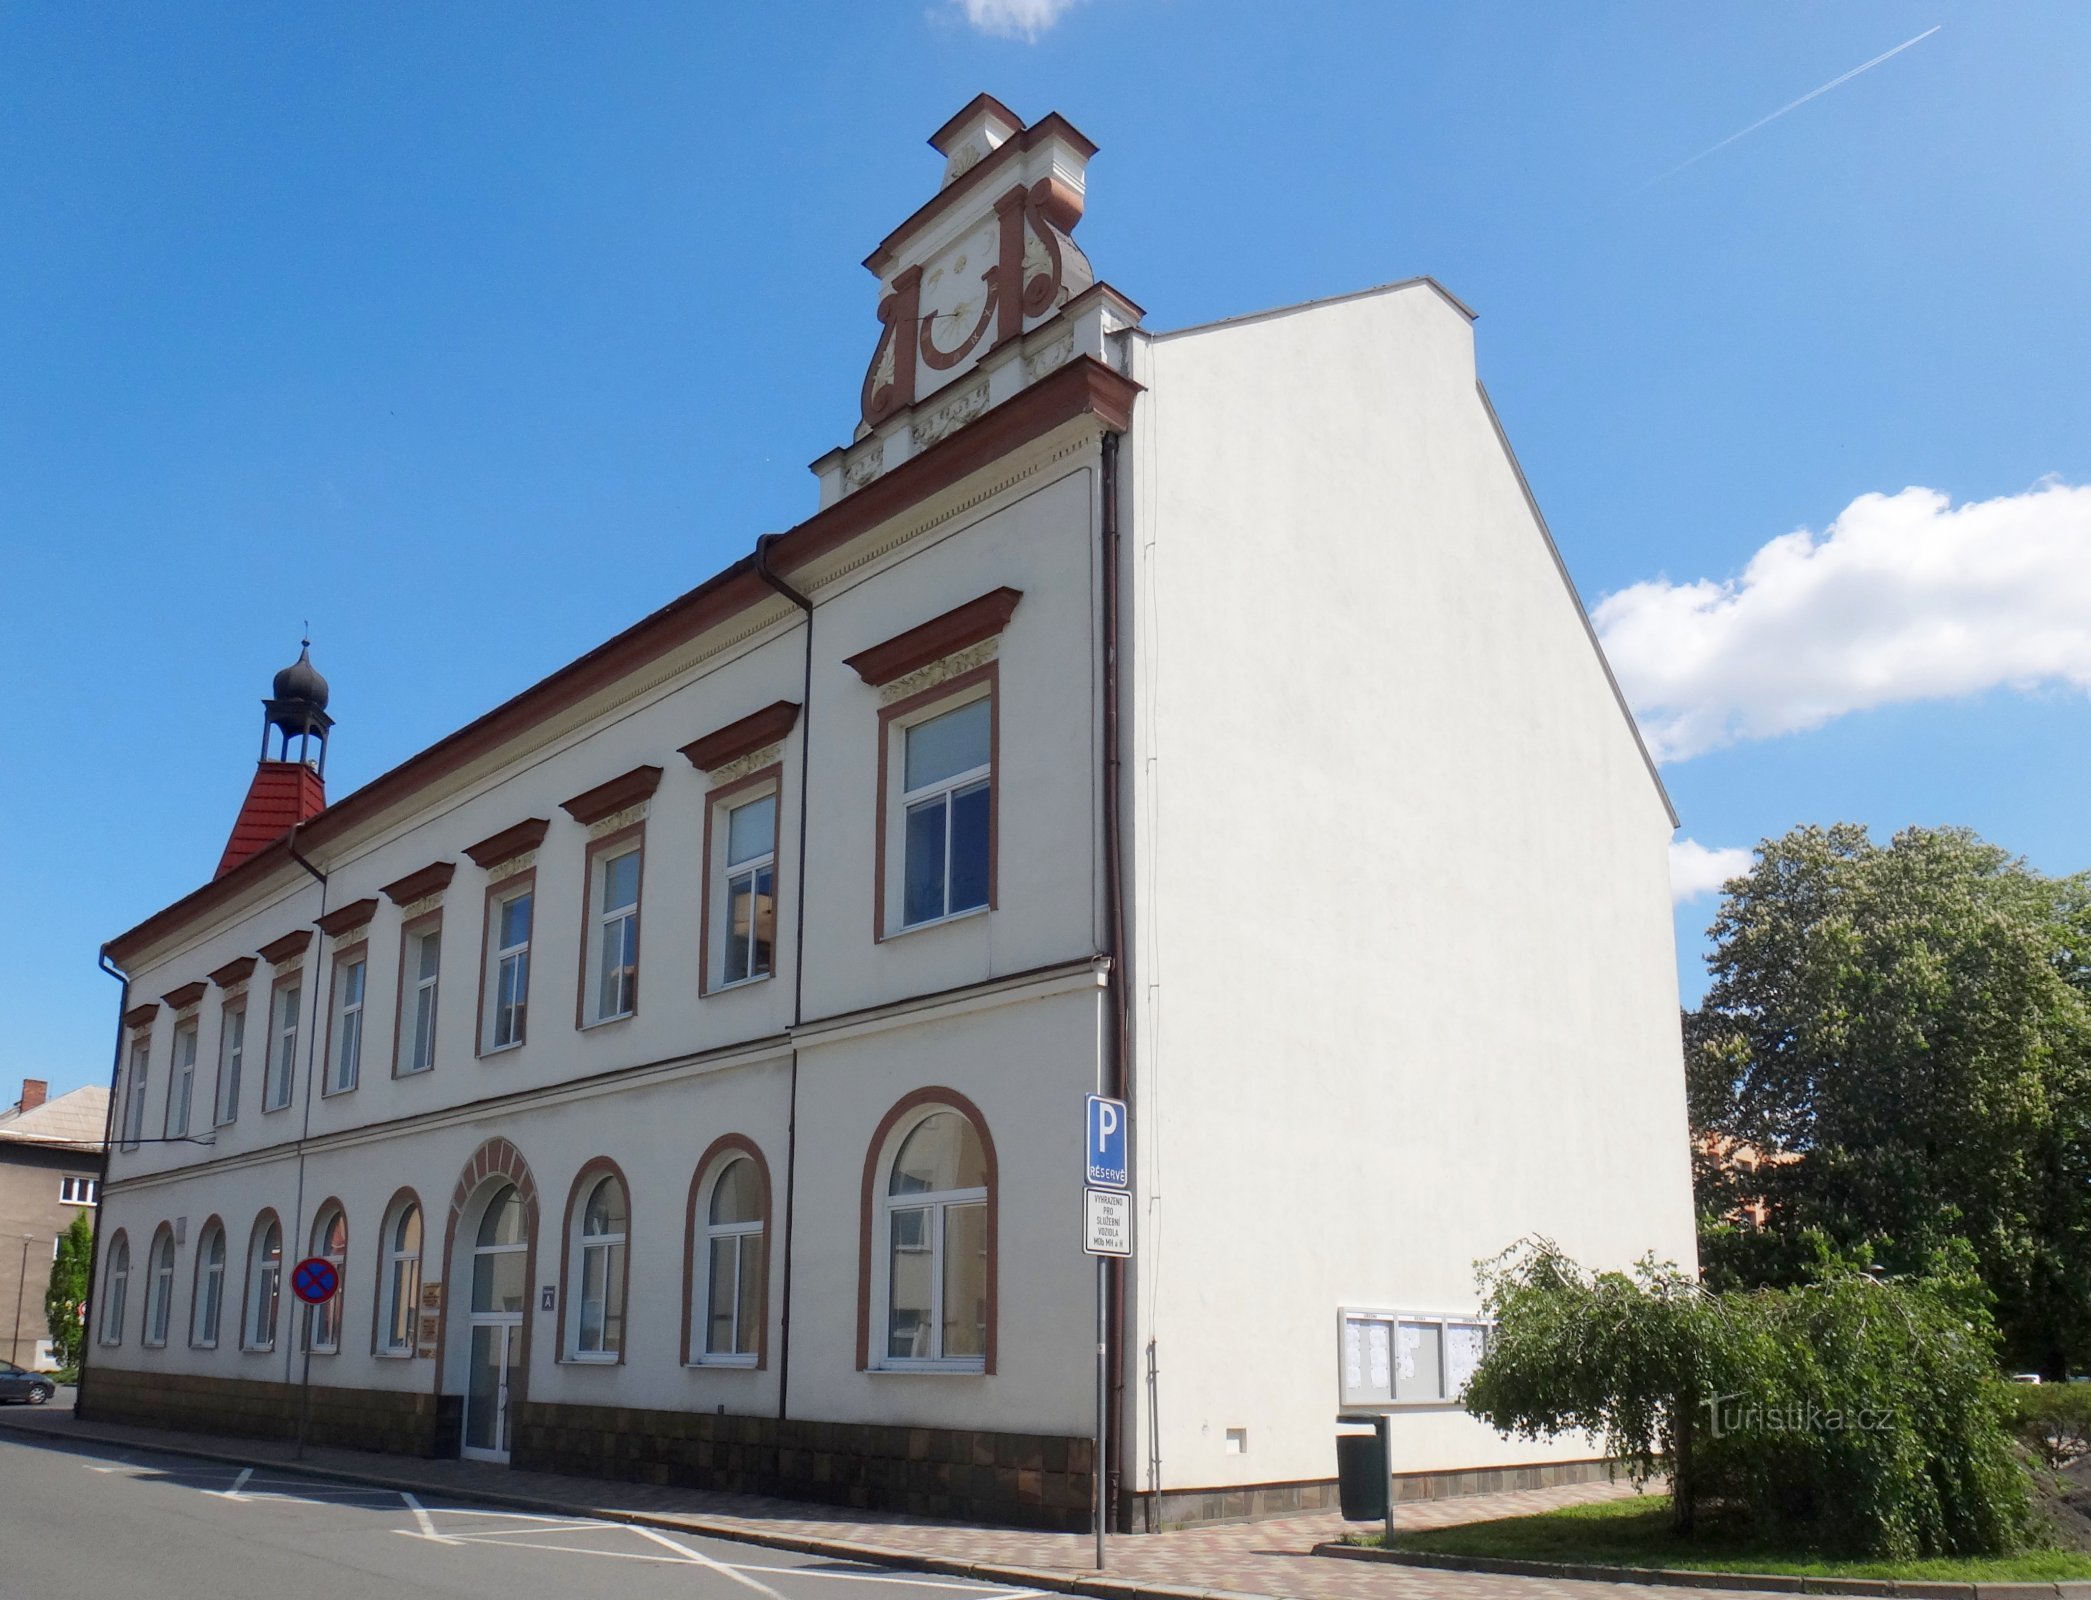 Ostrava-Marianske Hory Town Hall